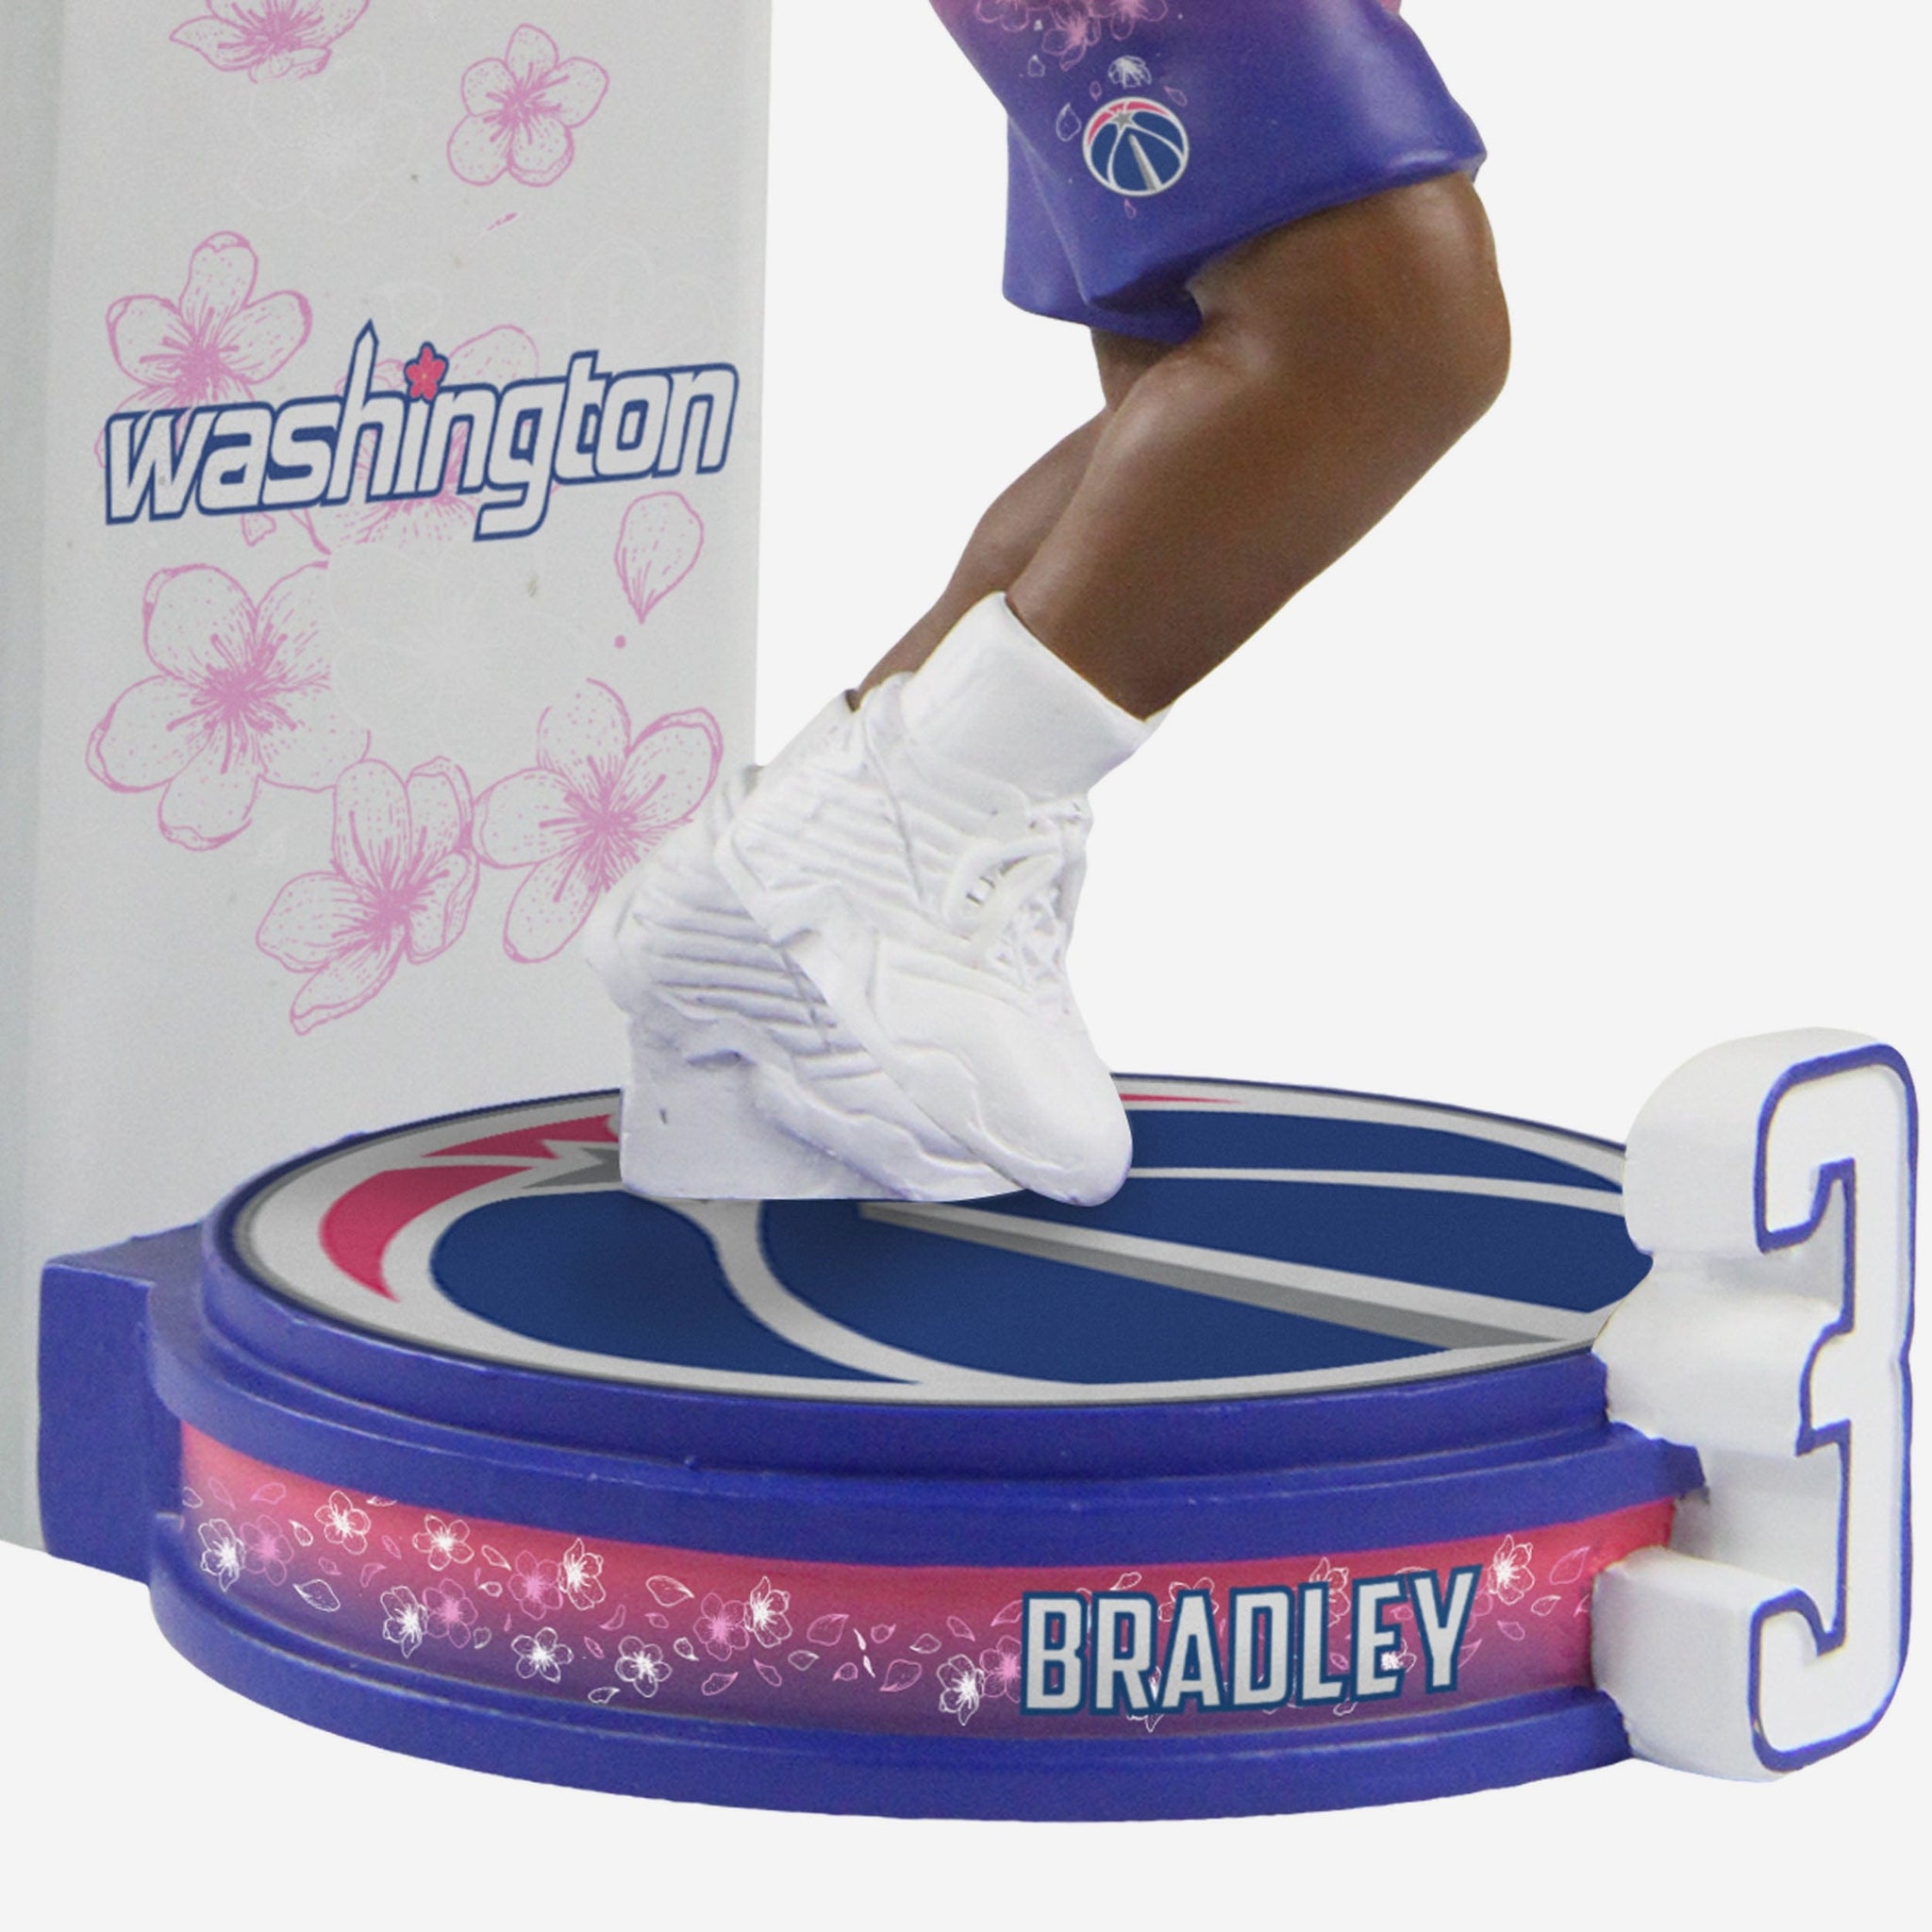 Bradley Beal - Washington Wizards - Game-Worn City Edition Jersey